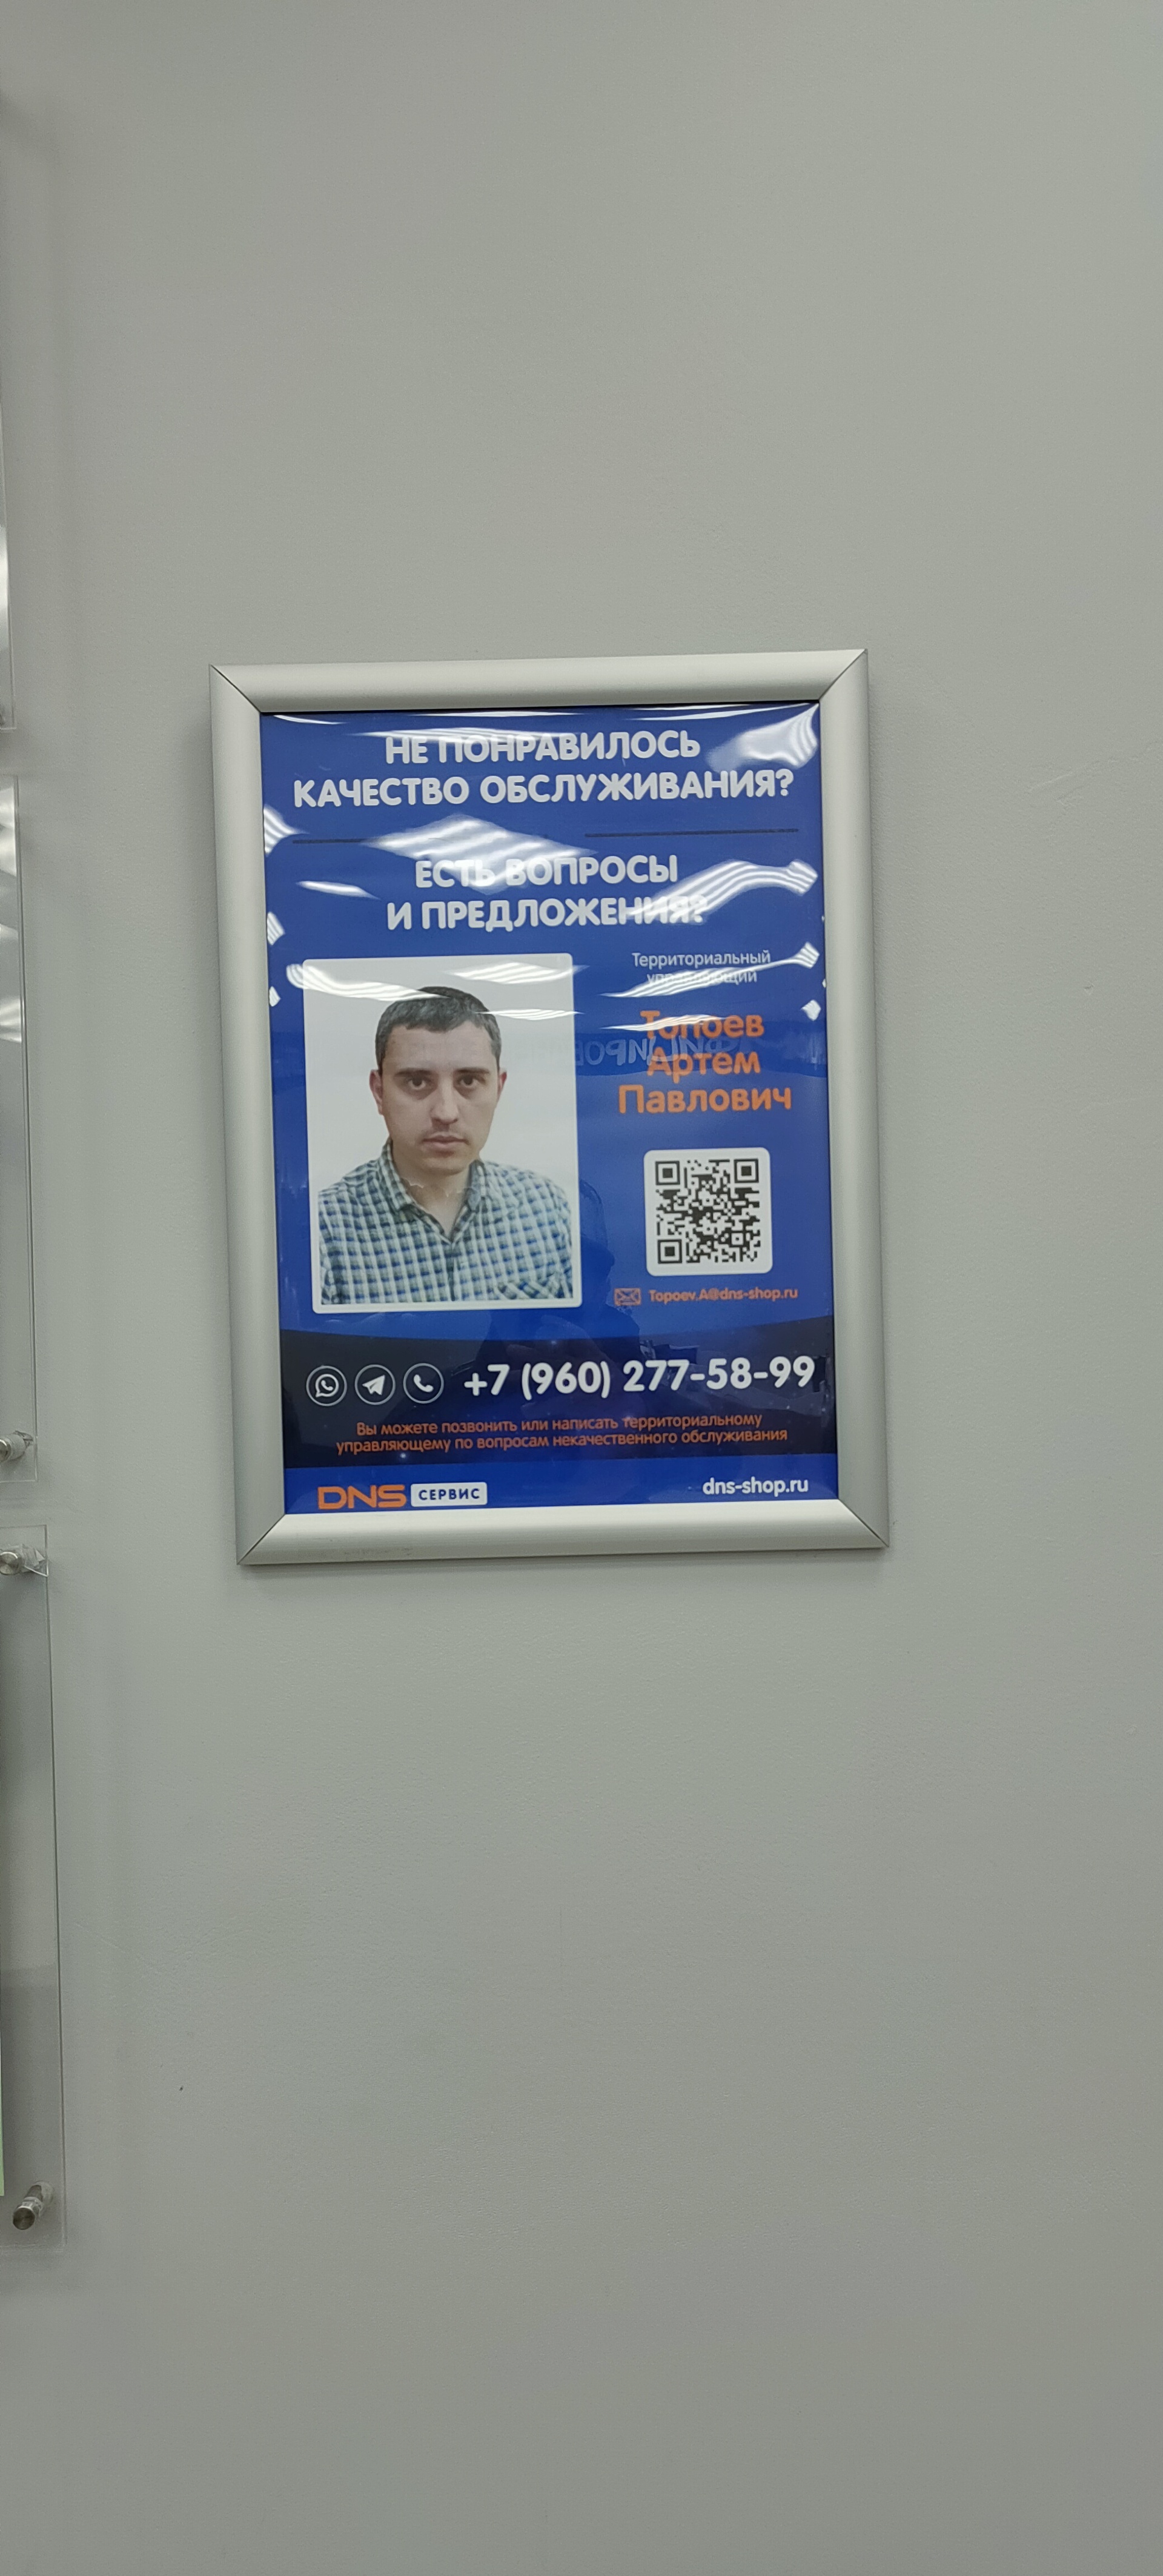 Сервисный центр DNS | Красноярск